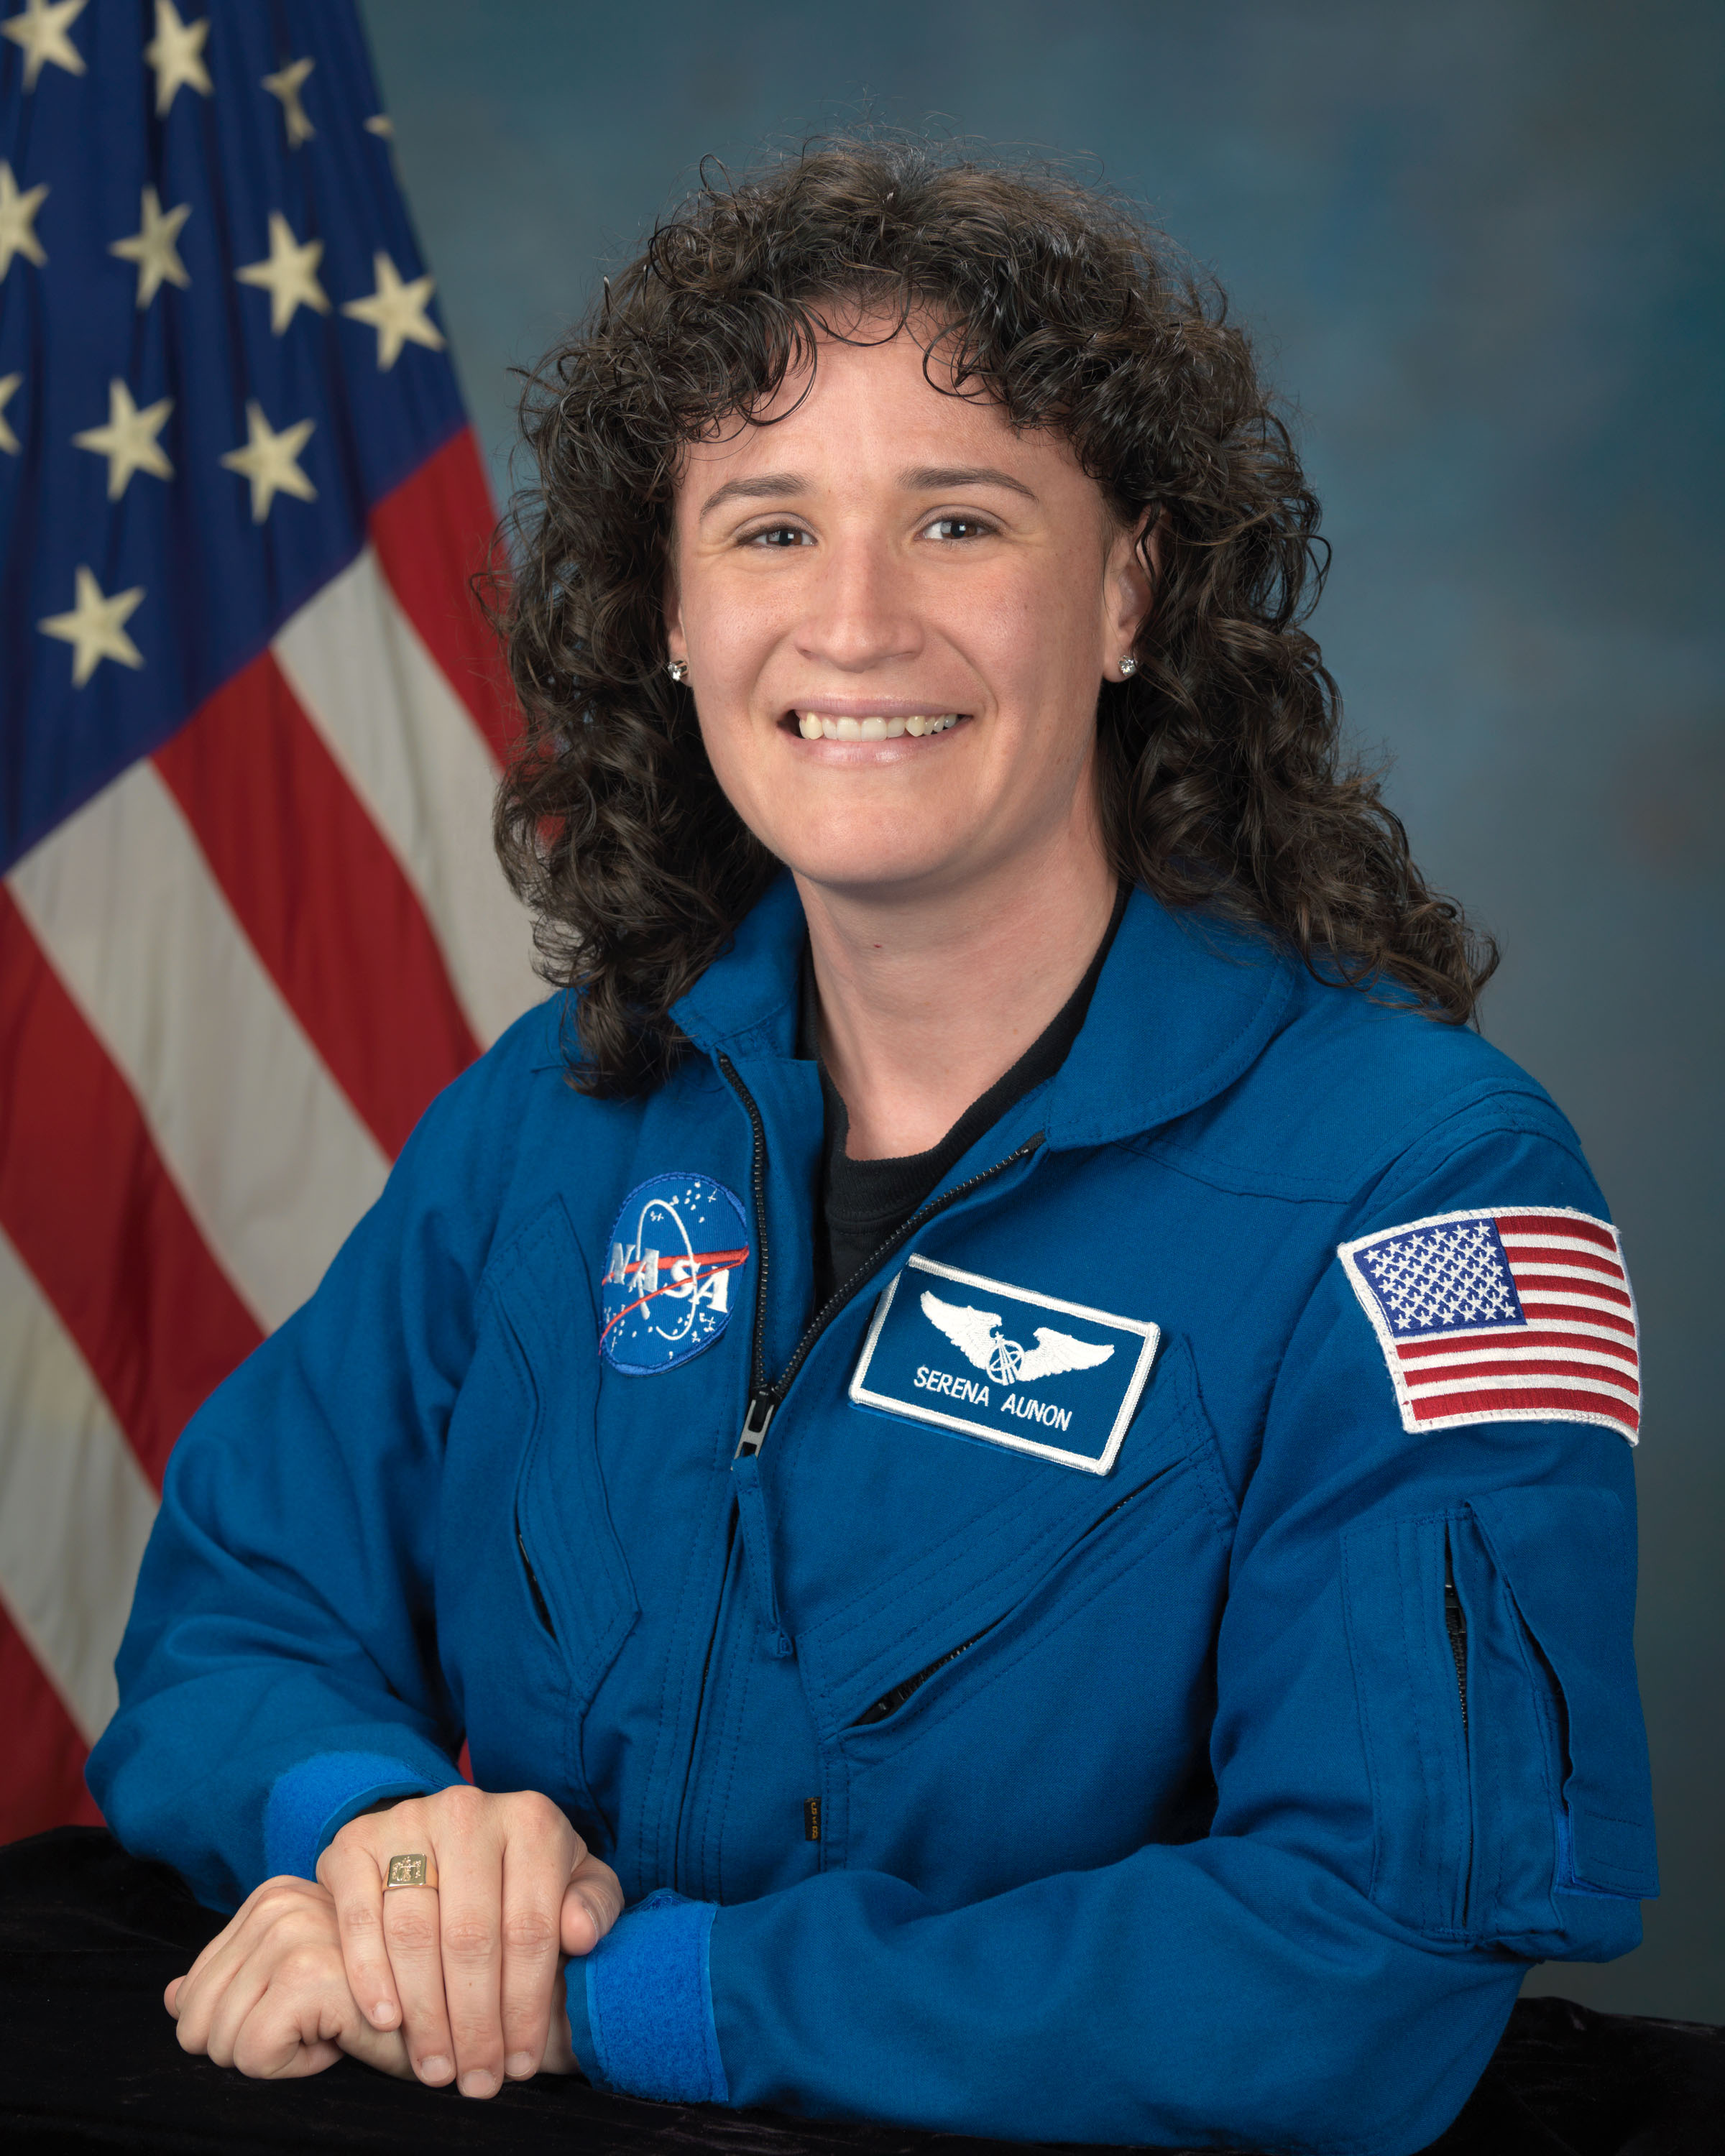 Photo Date: October 2, 2009 Location: Bldg. 8, Room 272 Photo Studio Subject: Official Astronaut portrait of Serena Aunon Photographer: Robert Markowitz